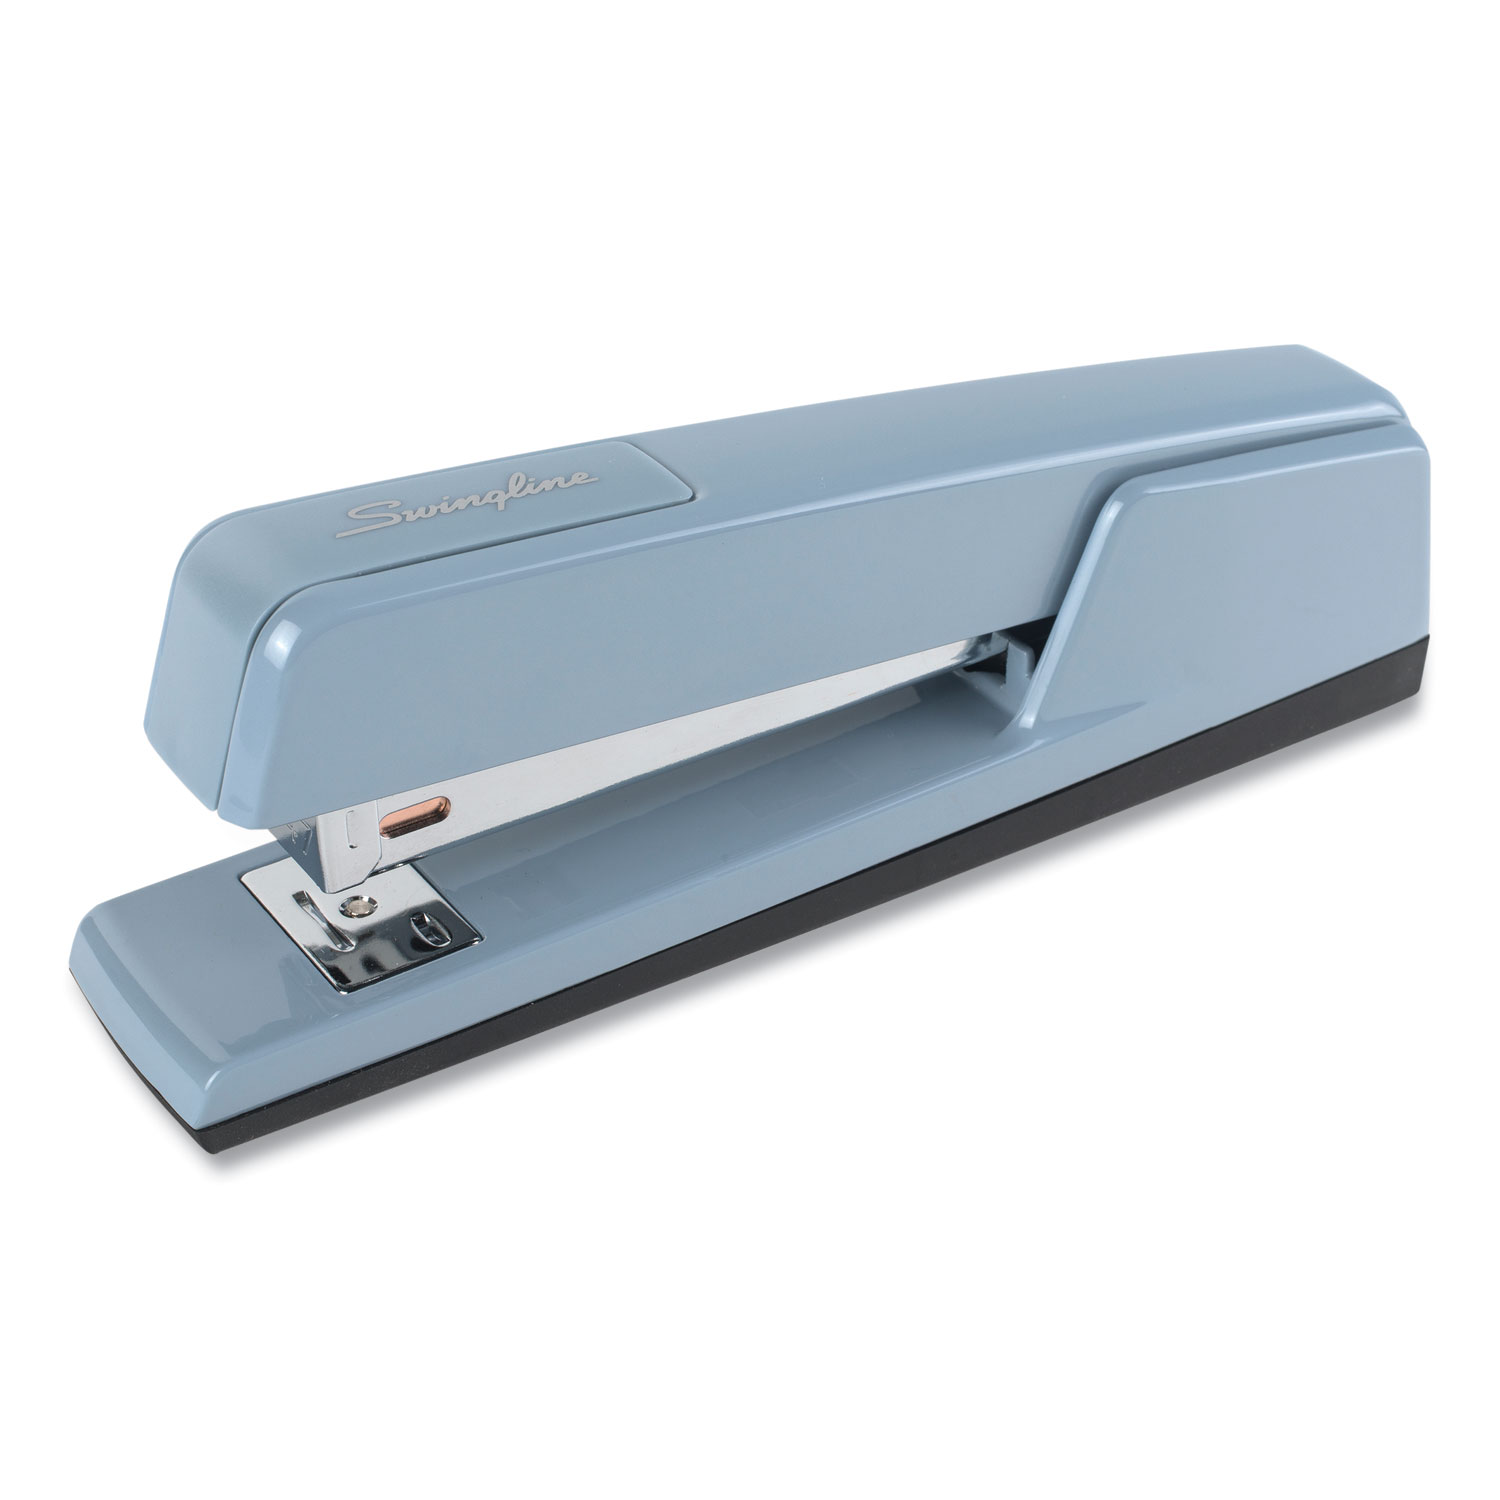 Desk stapler: for up to 30 sheets